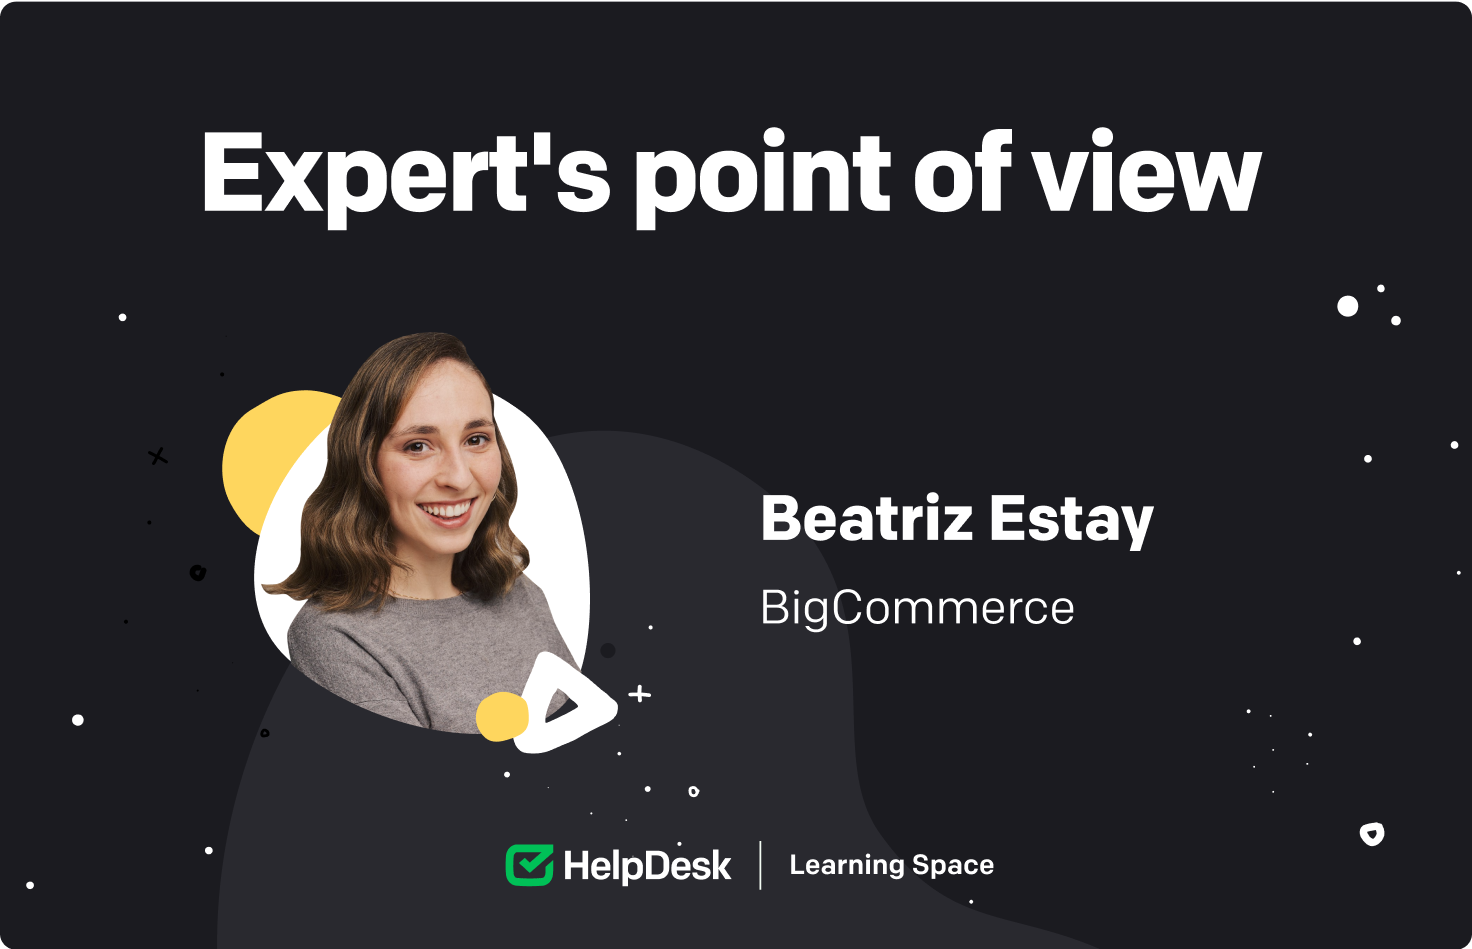 Beatriz Estay from BigCommerce.